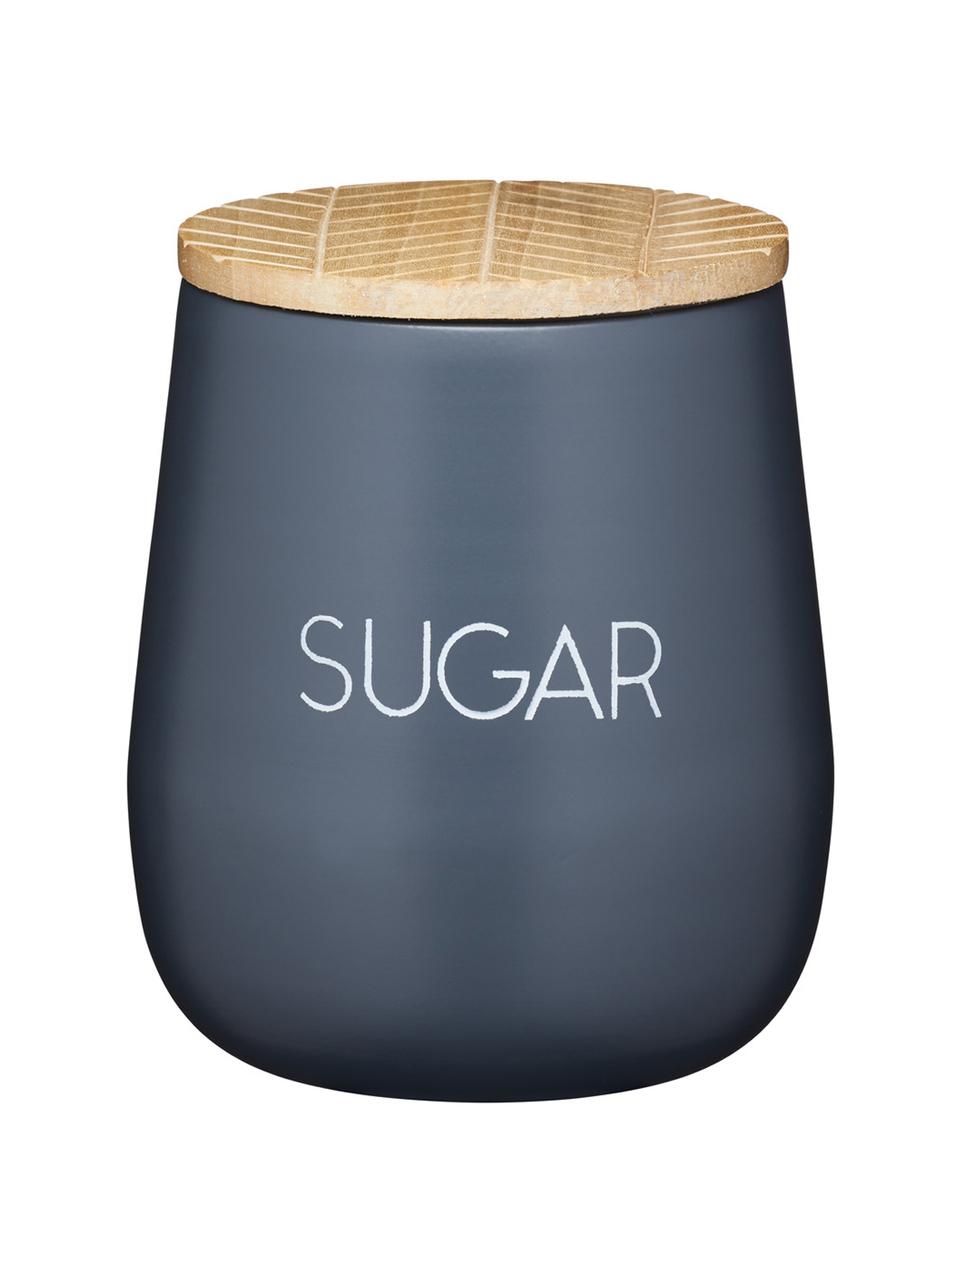 Bote Serenity Sugar, Gris antracita, madera, Ø 13 x Al 15 cm, 1,6 L